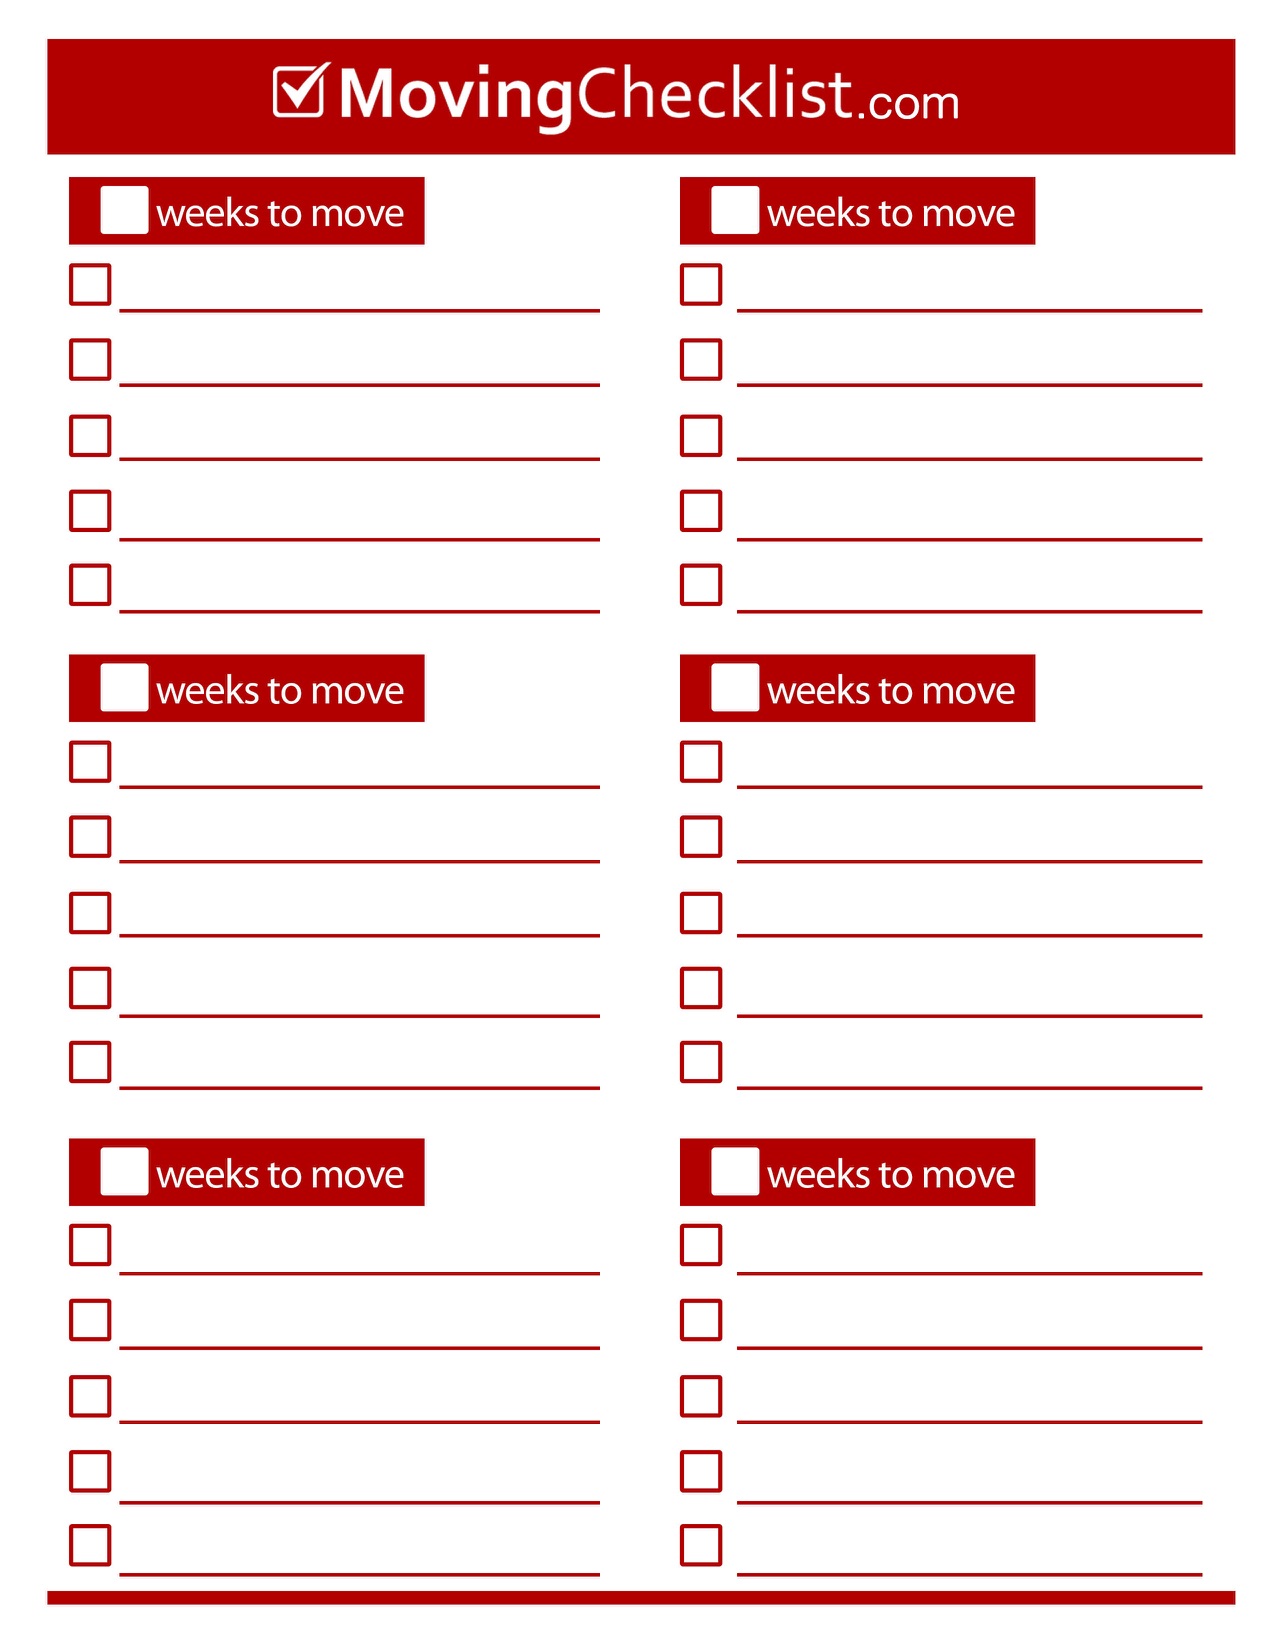 Moving checklist lokiparking